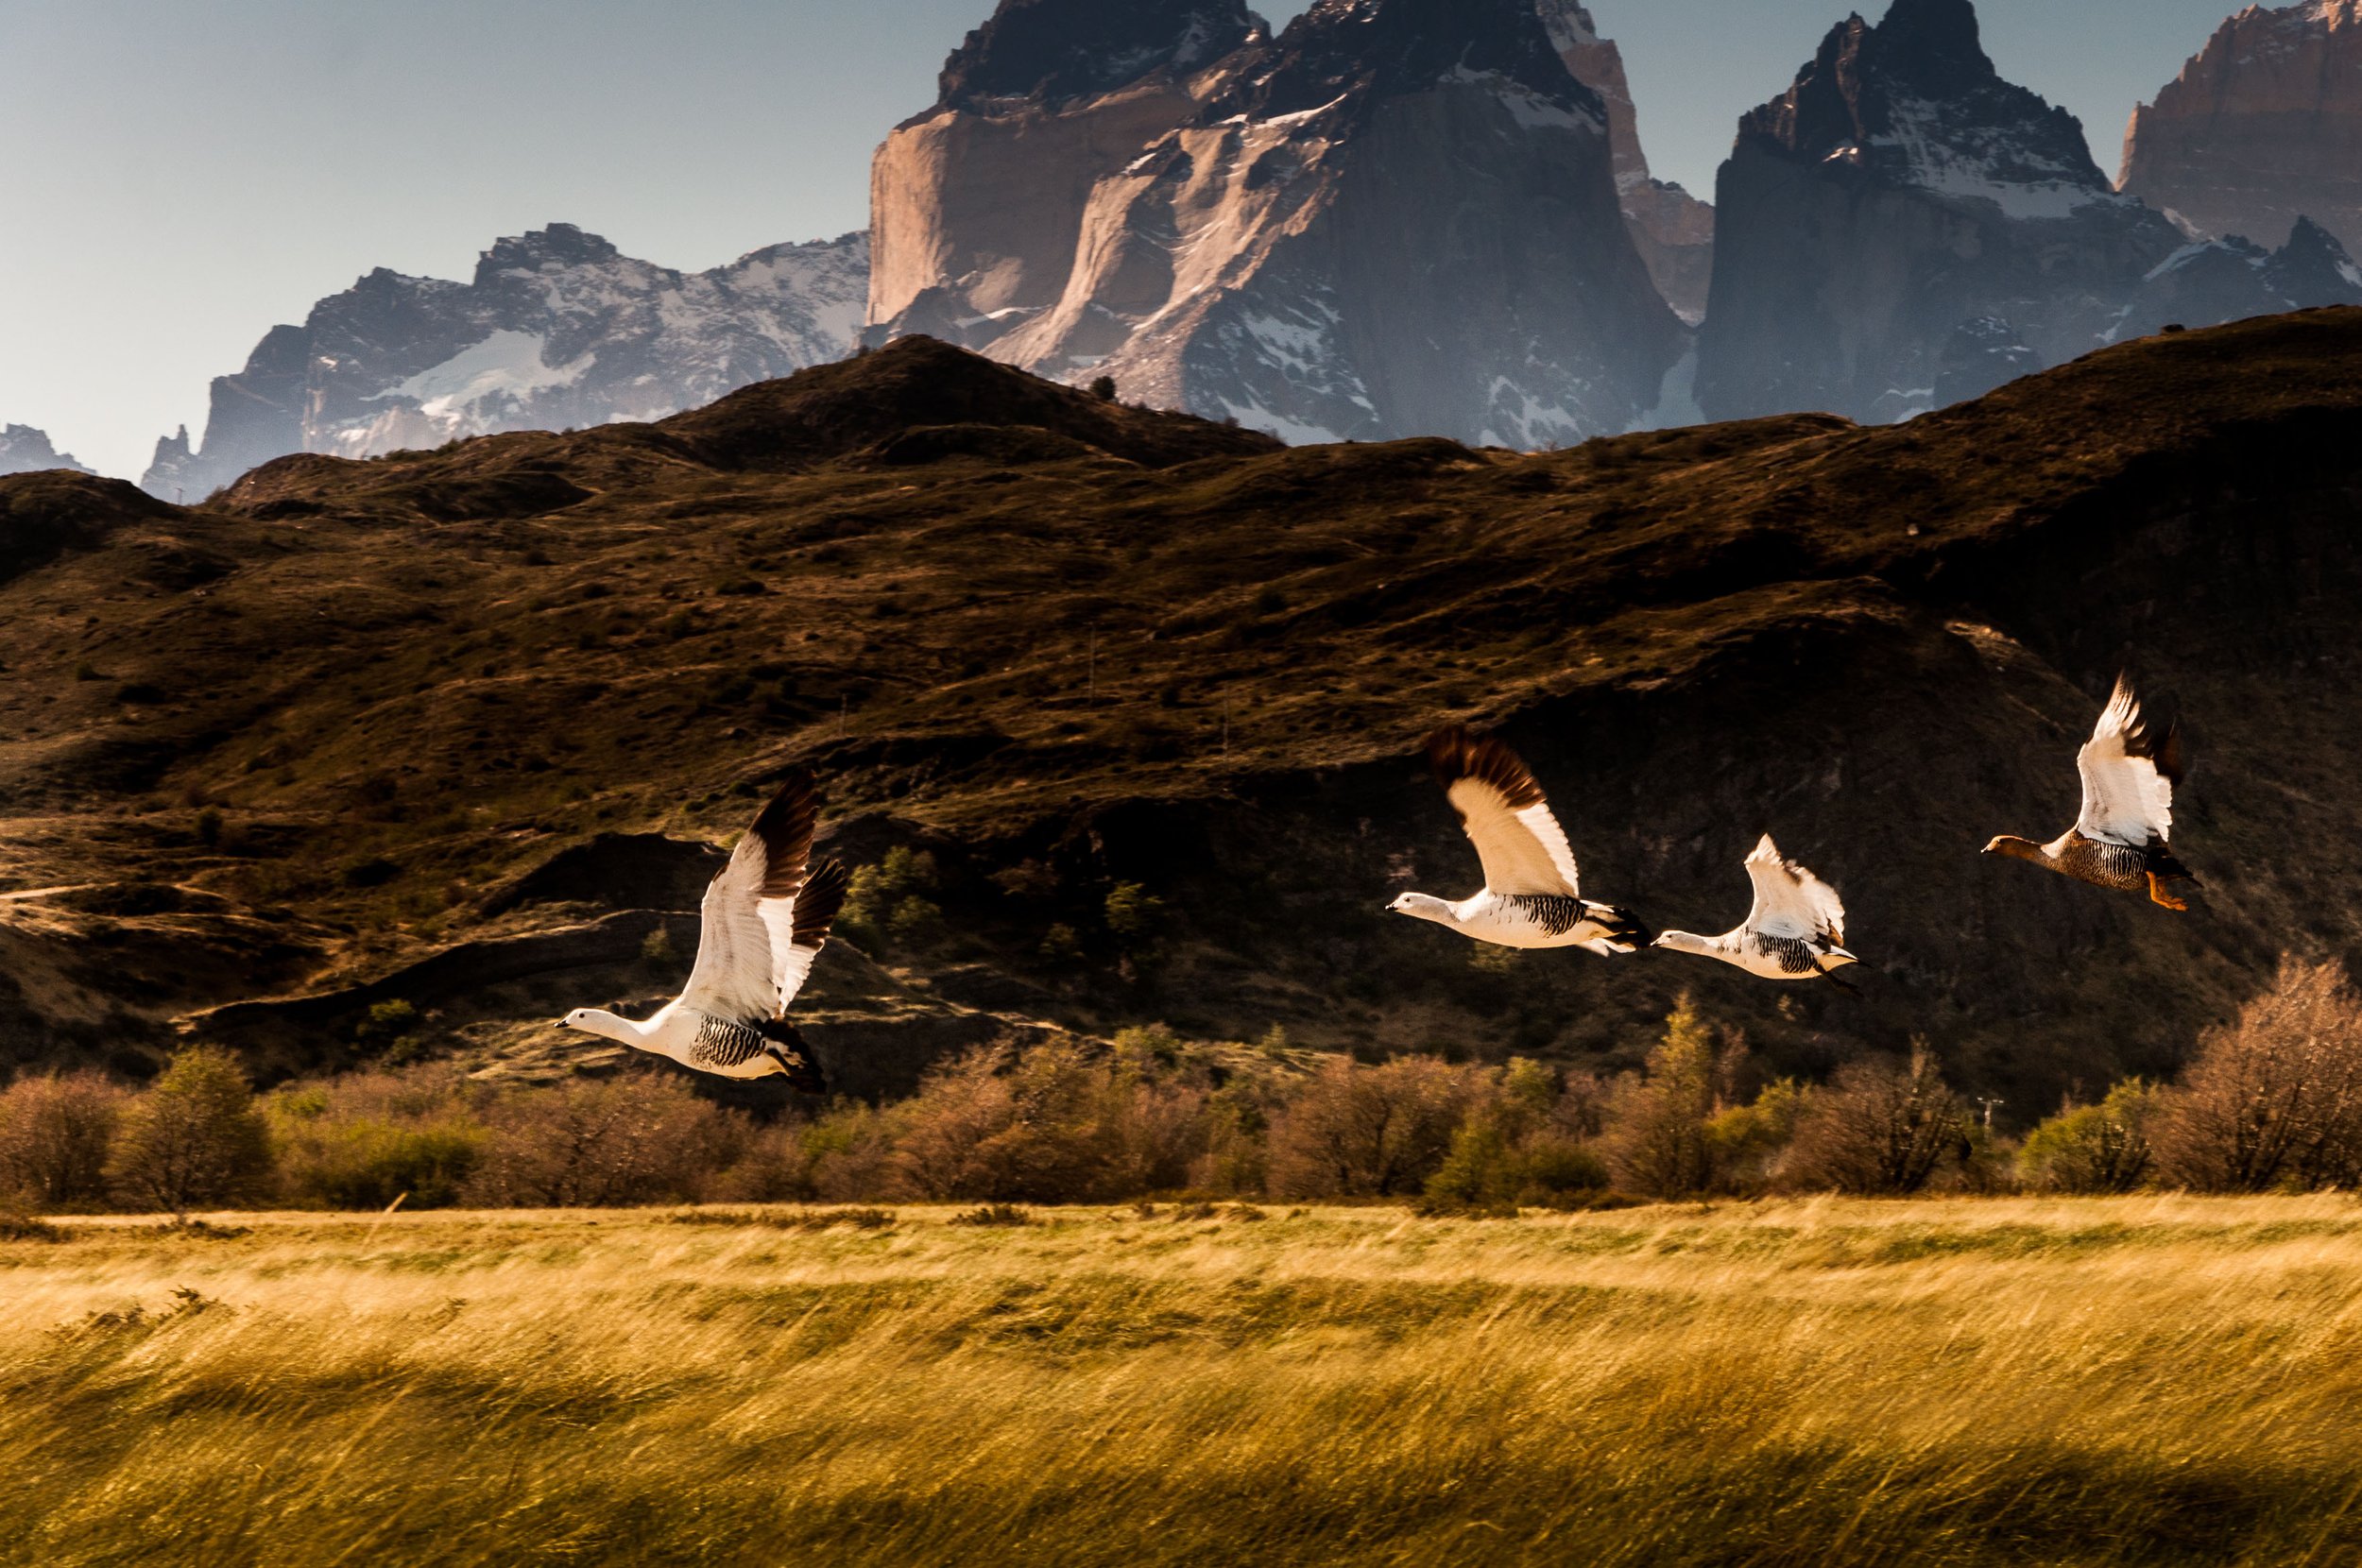 Awasi Patagonia - Landscape - Torres del Paines National Park.jpg